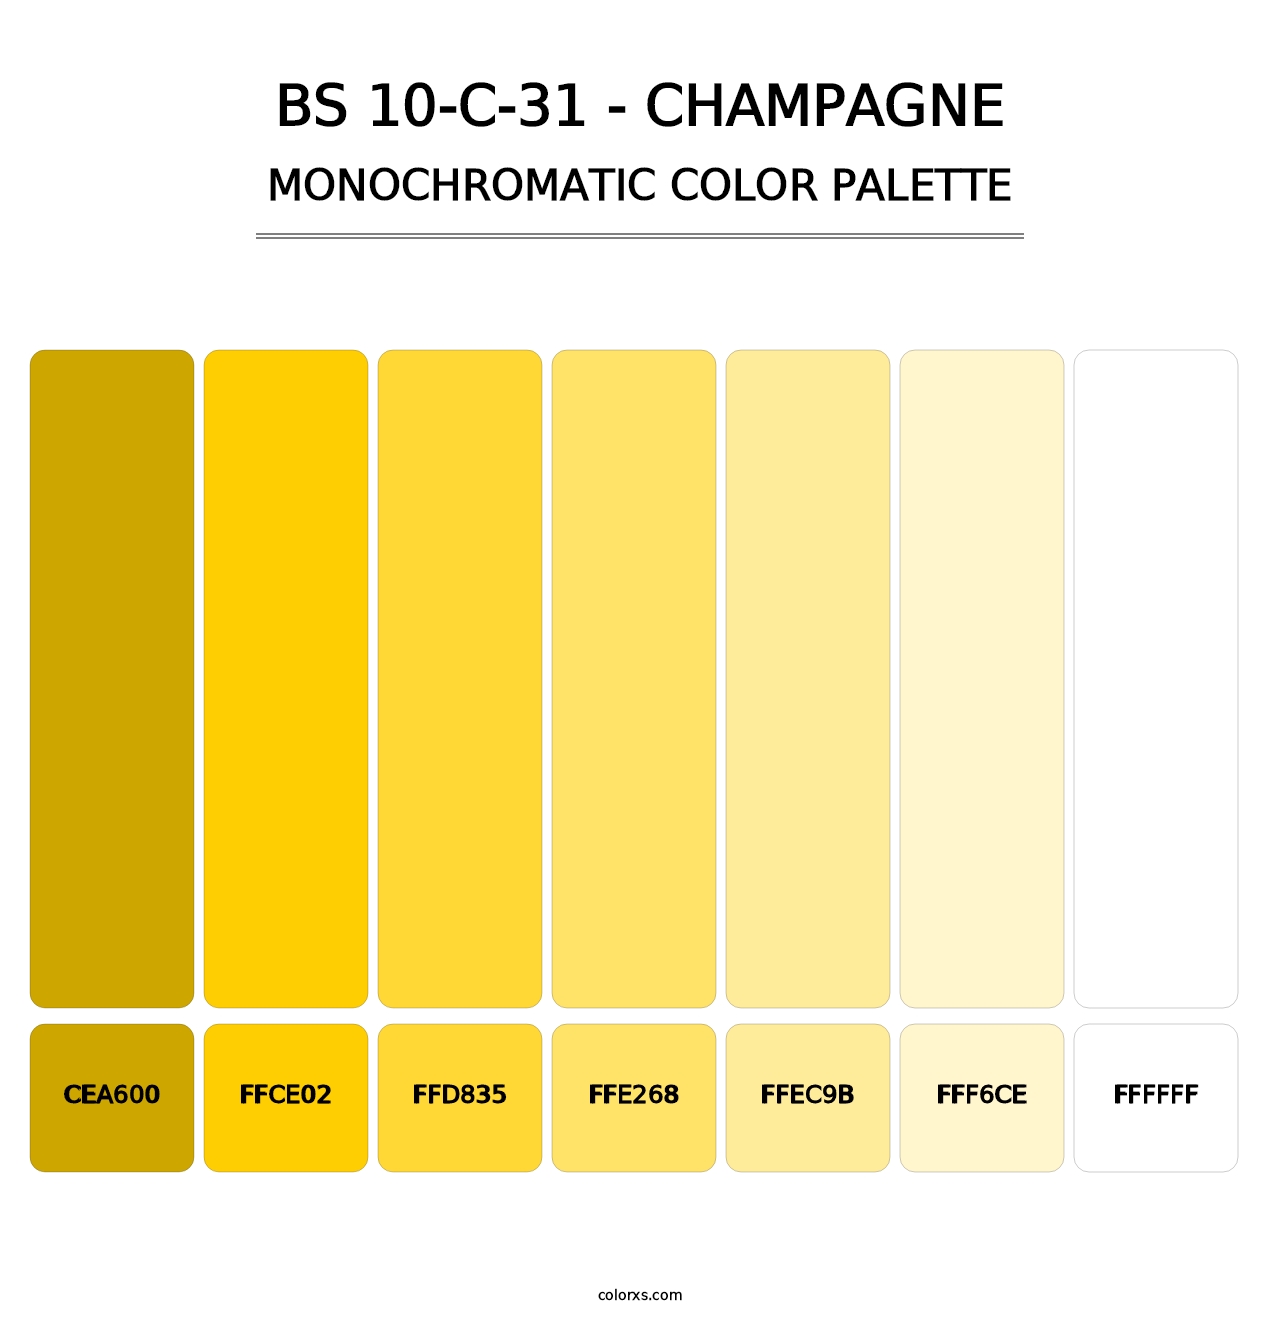 BS 10-C-31 - Champagne - Monochromatic Color Palette